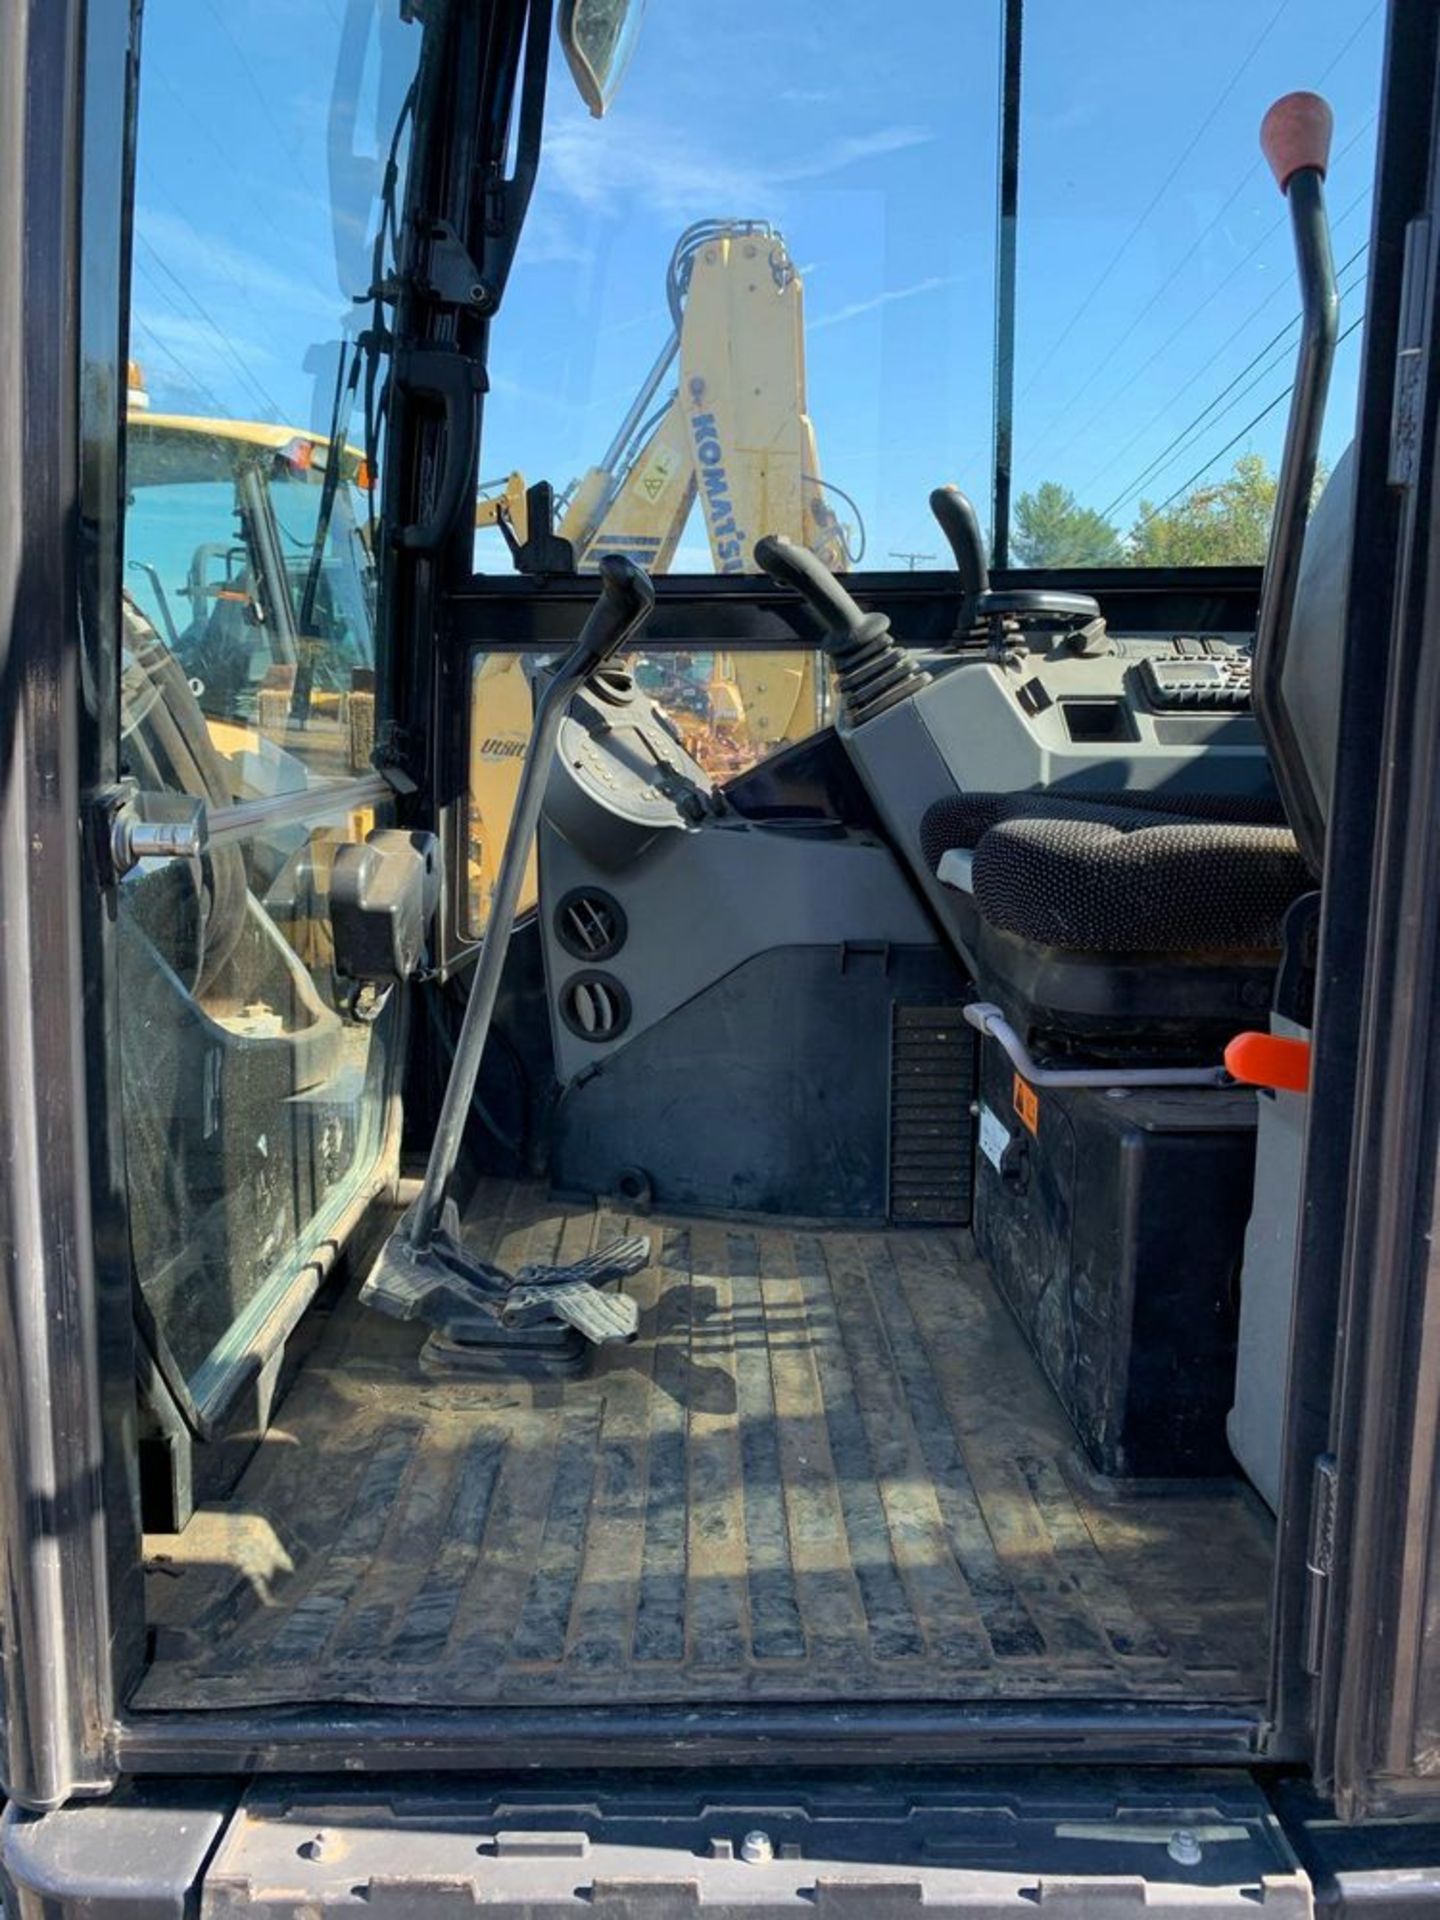 2018 Bobcat E85 R Series Excavator - Image 36 of 85